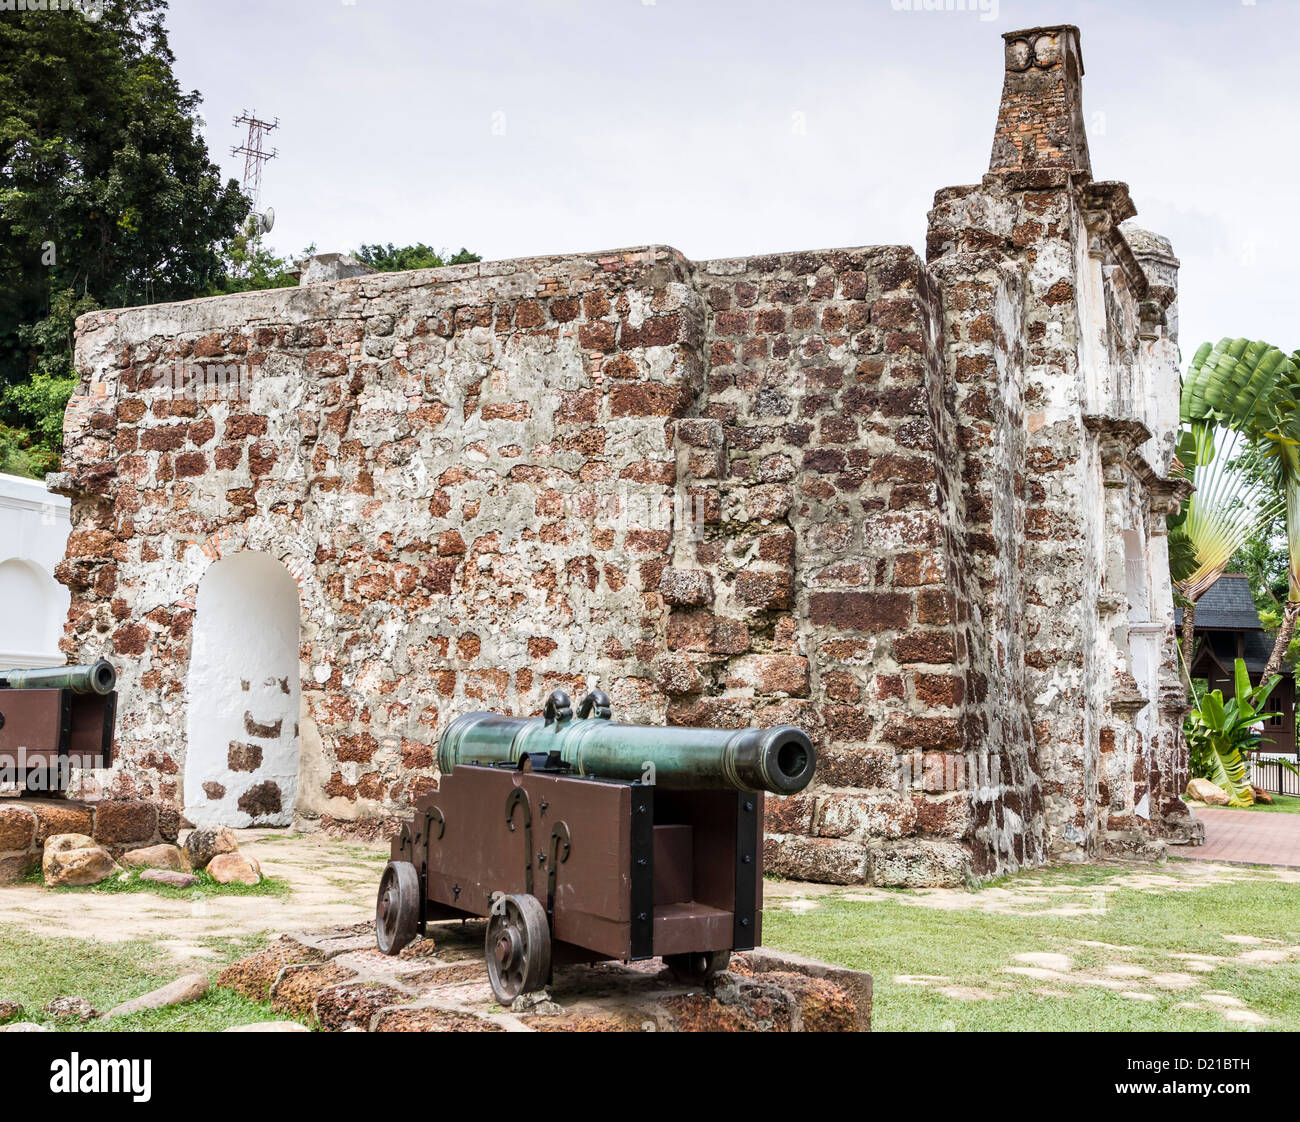 The historic Portuguese fort, A Famosa, in Malacca (Melaka), Malaysia Stock Photo